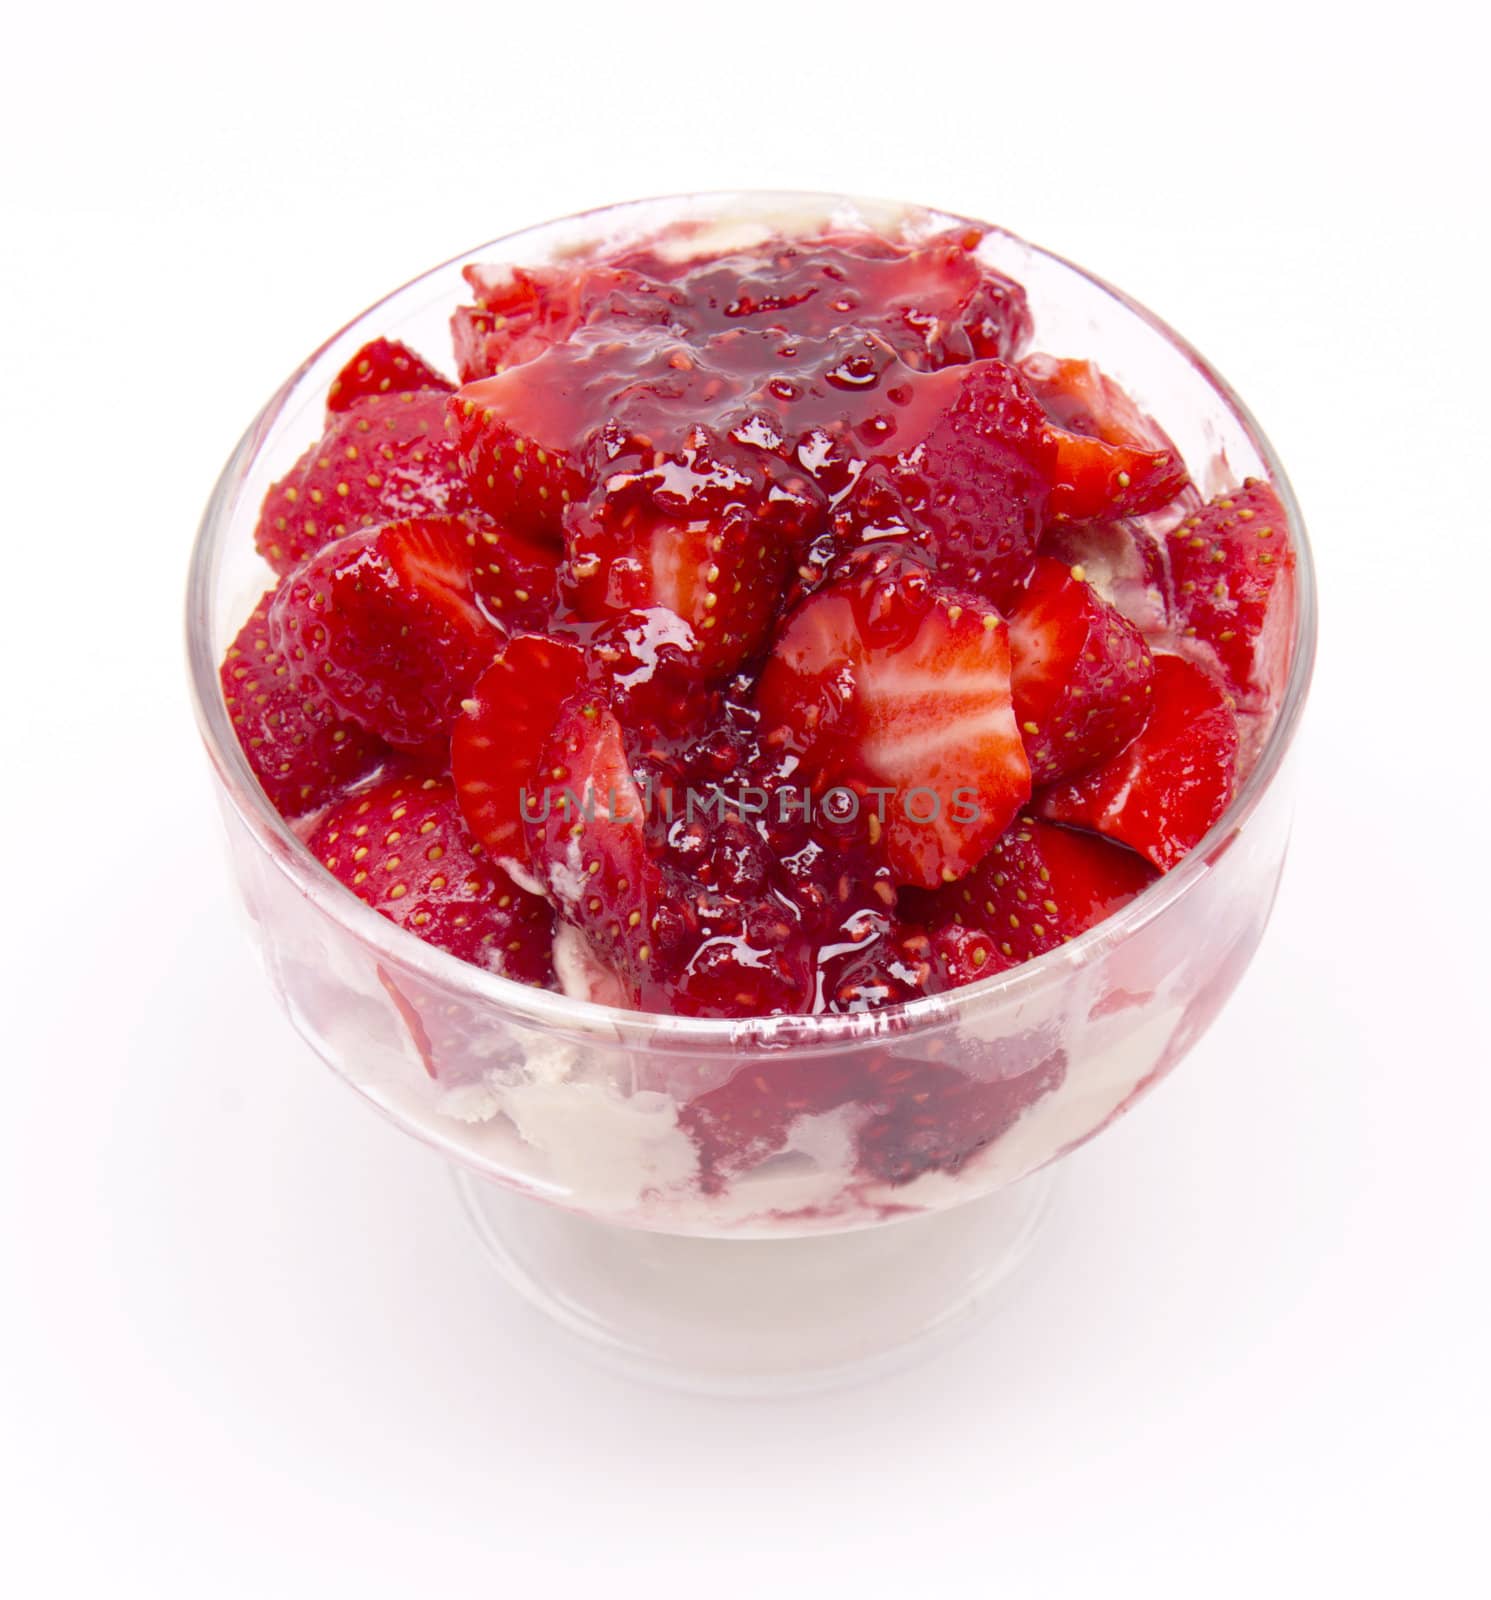 Ice cream with fresh strawberry  by oxanatravel